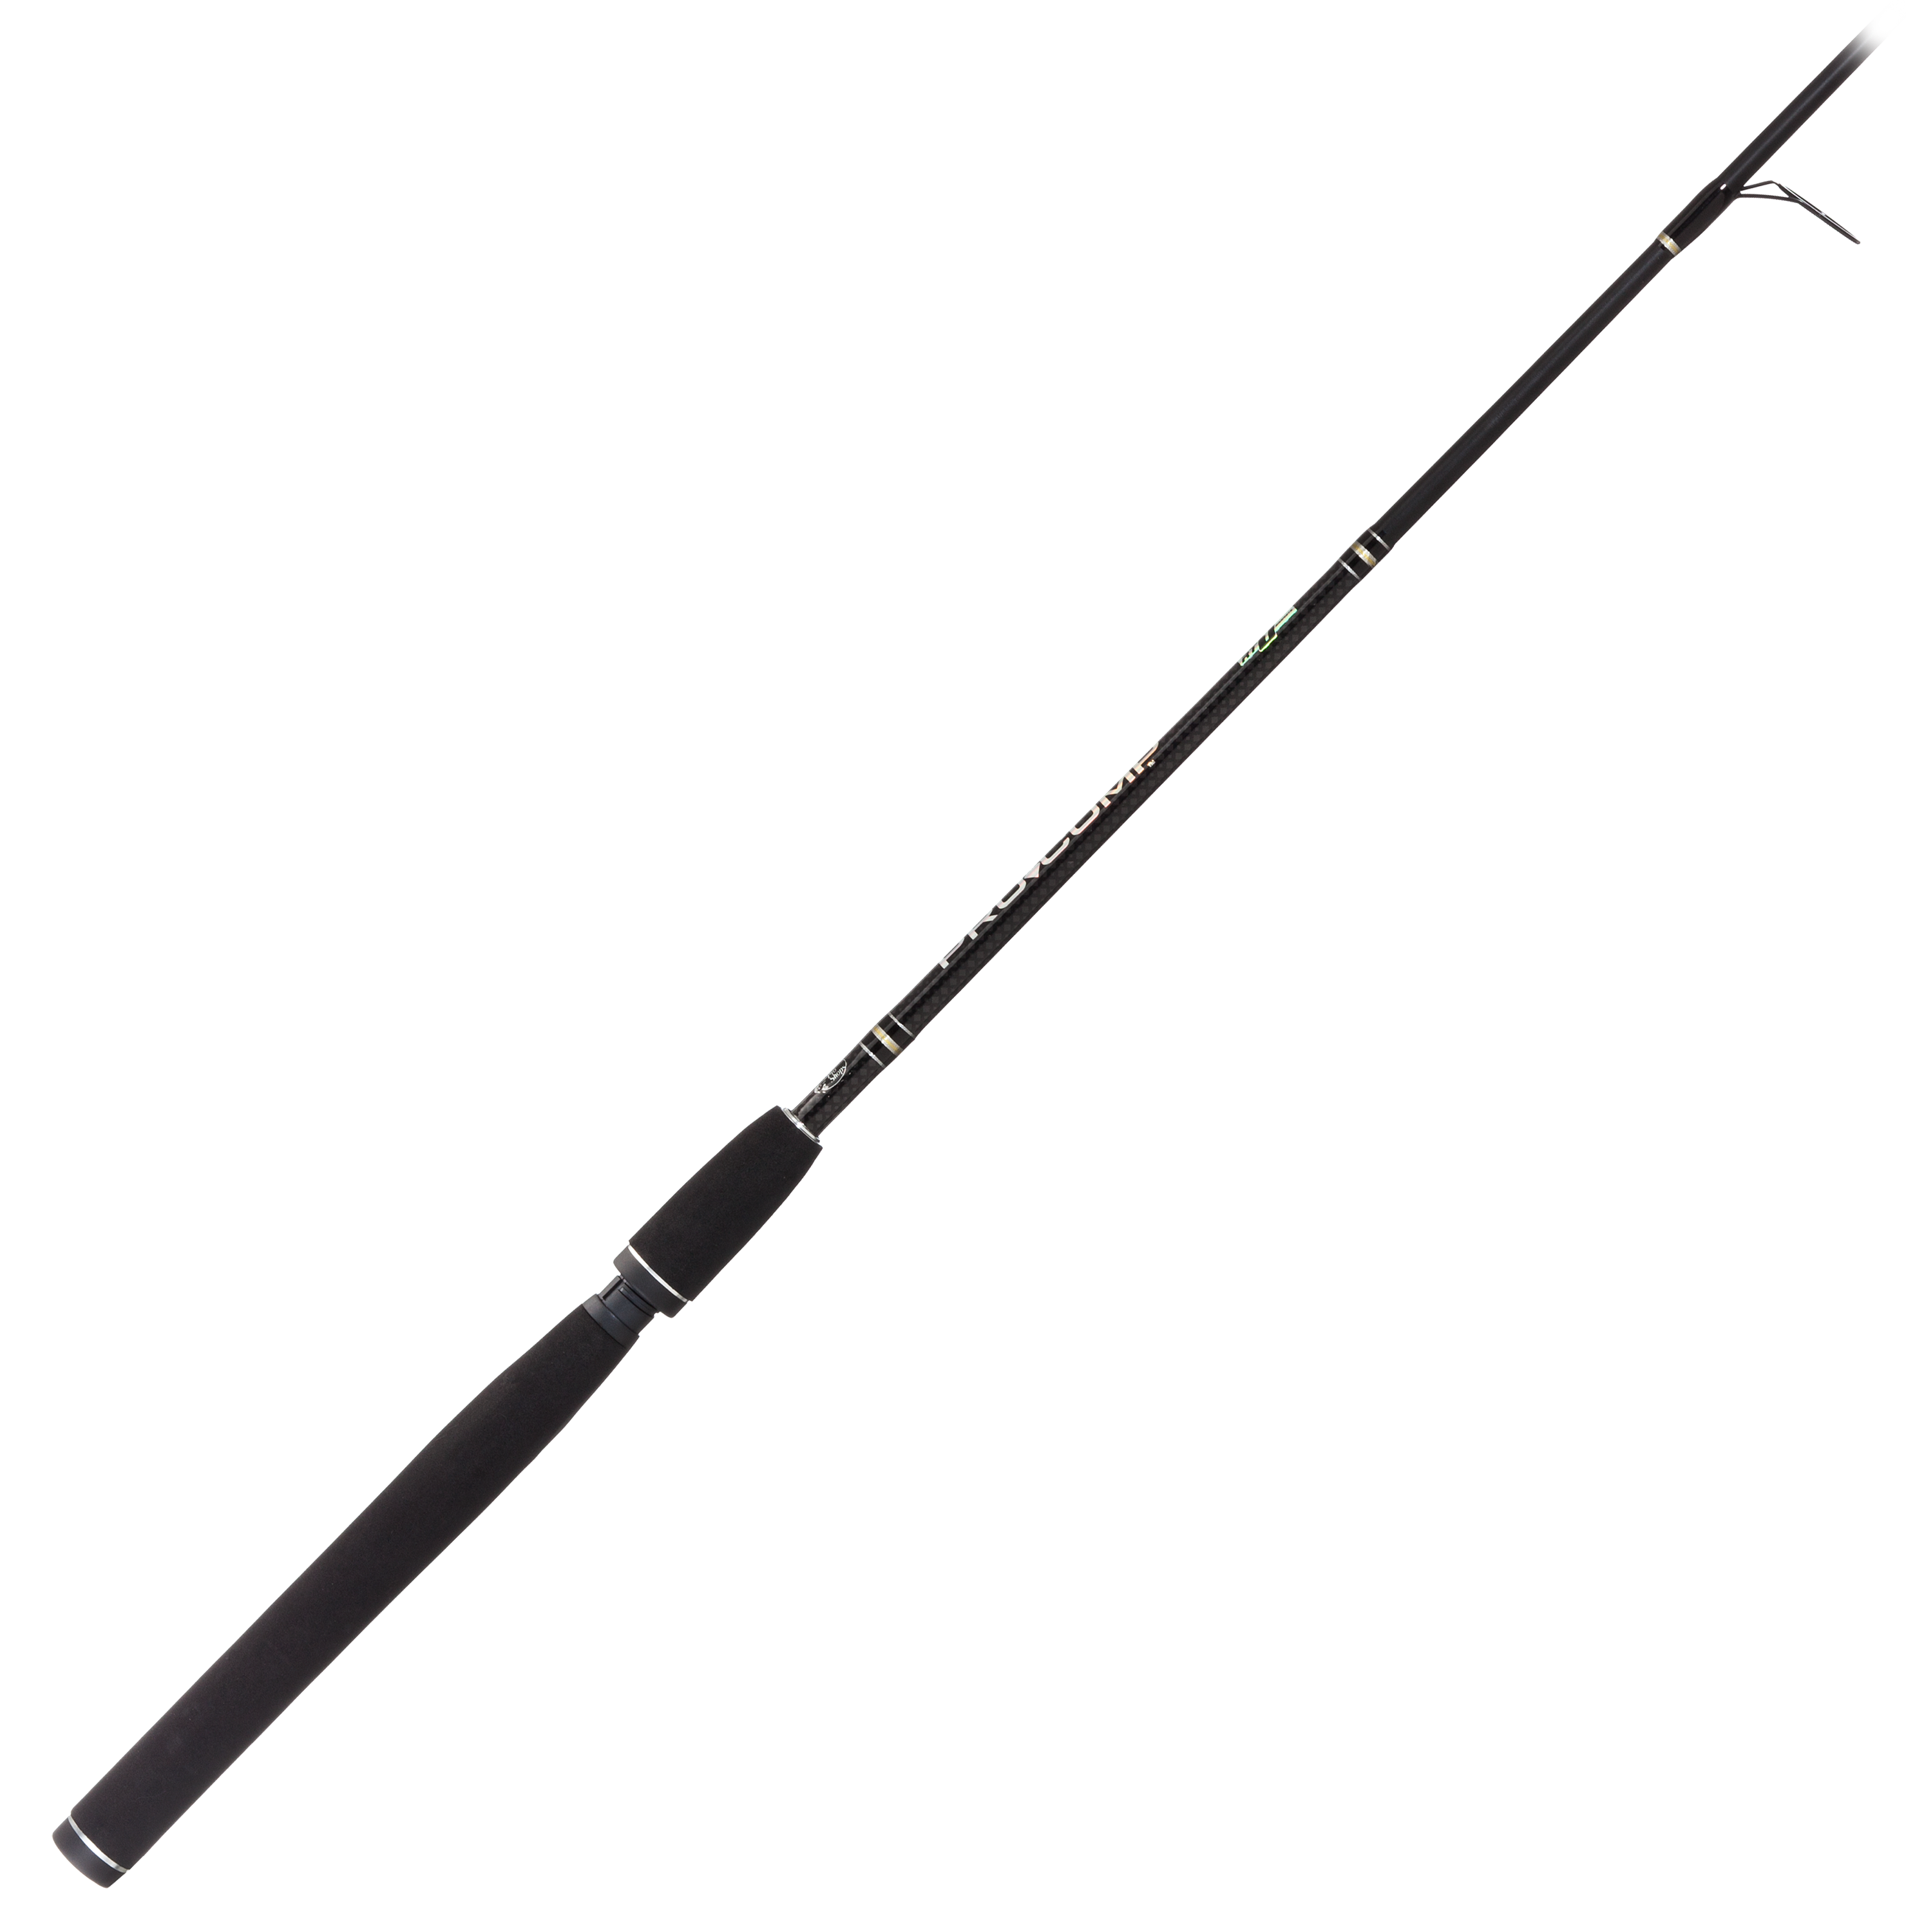 Bass Pro Shops Pro Comp II 7’6” Med Lt Action Line 12- 20 Telescoping Rod  Lot G6